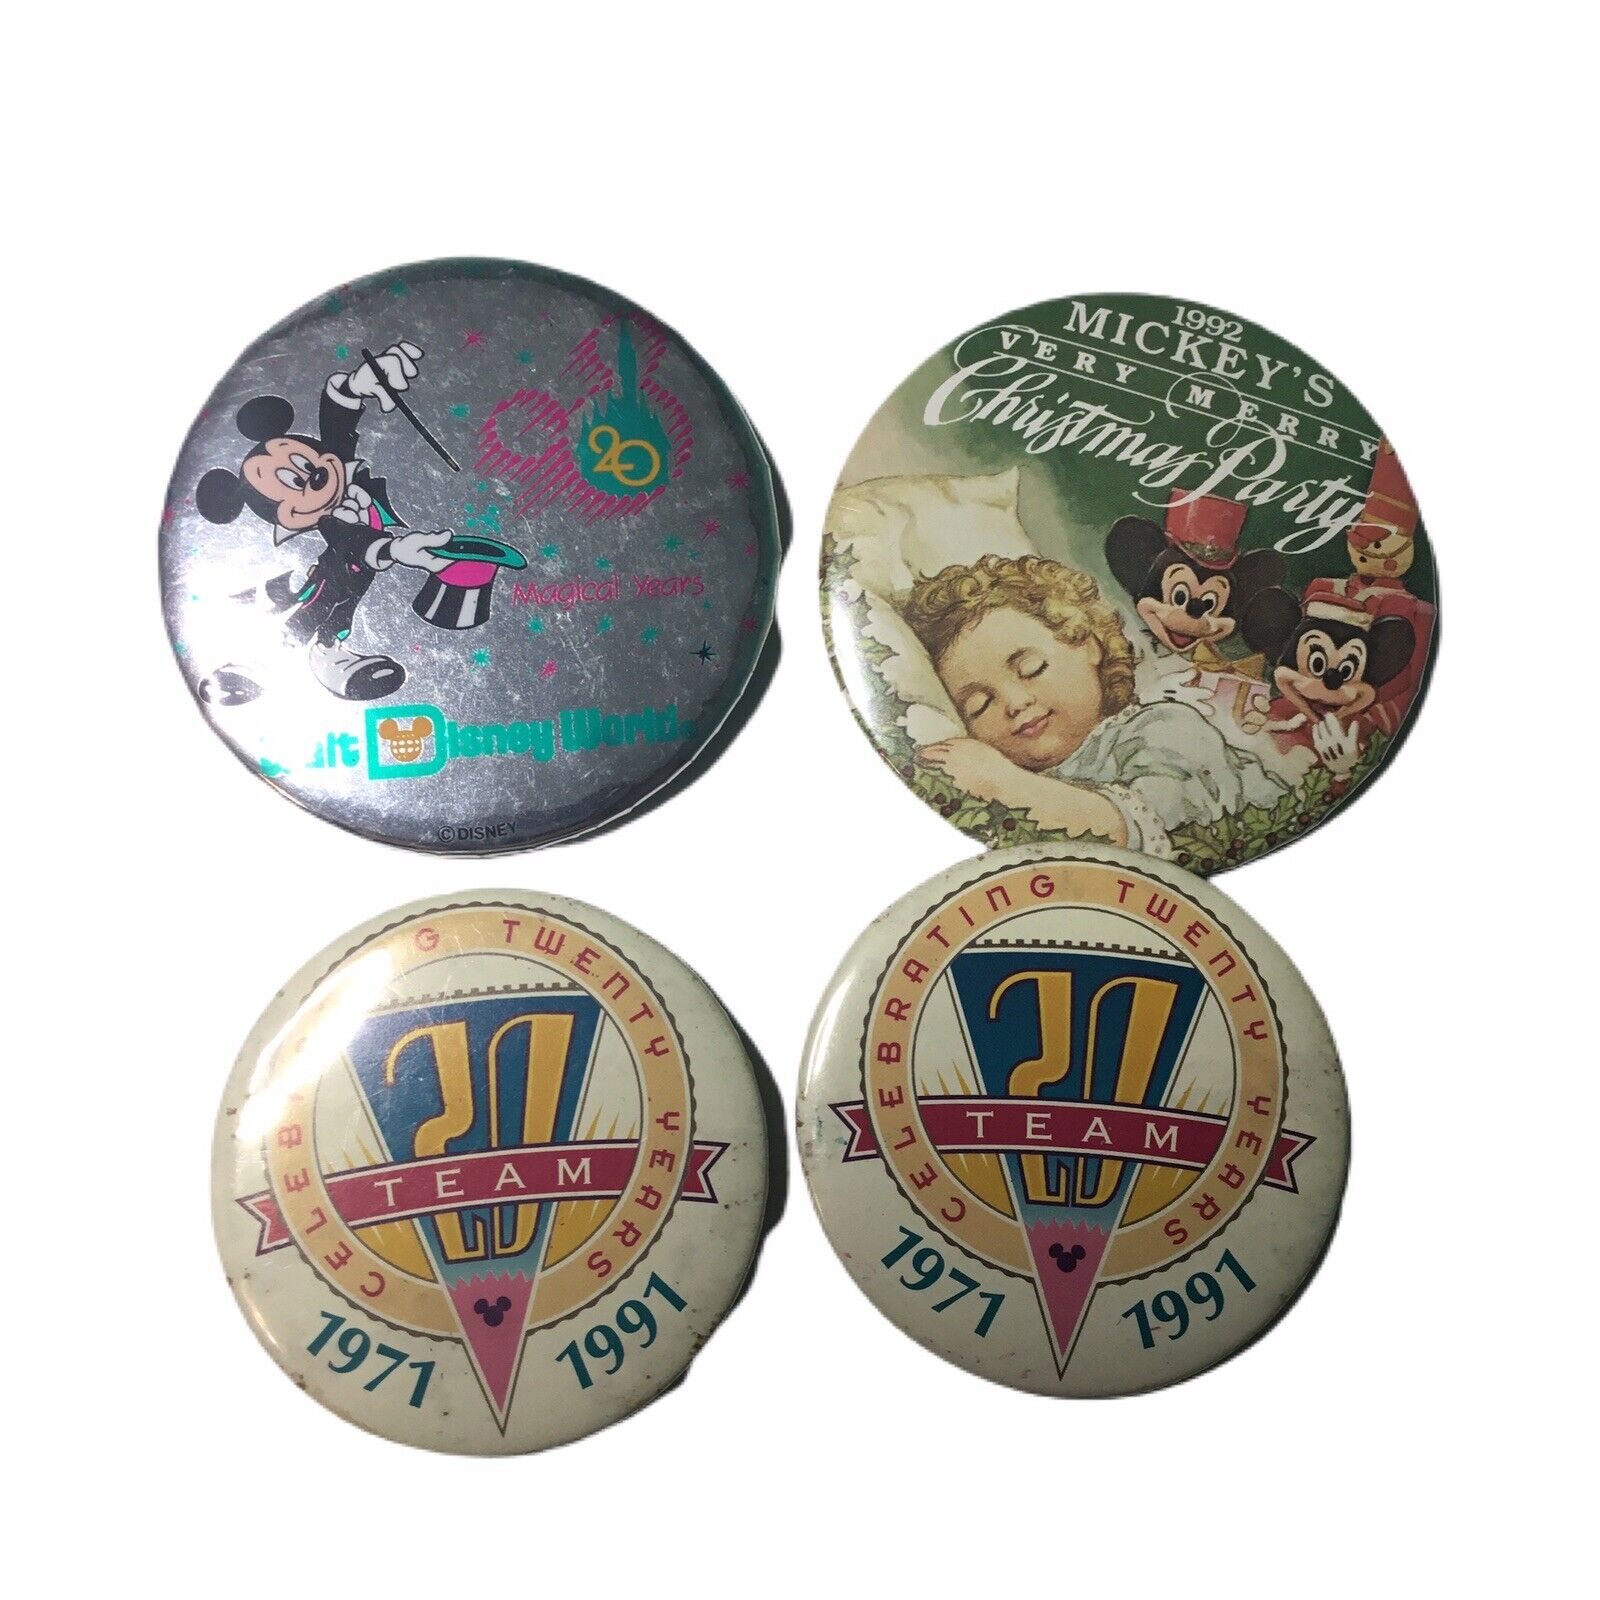 Vintage Disney Buttons Pins Set of 4 Walt Disney World 20th Anniversary MVMCP